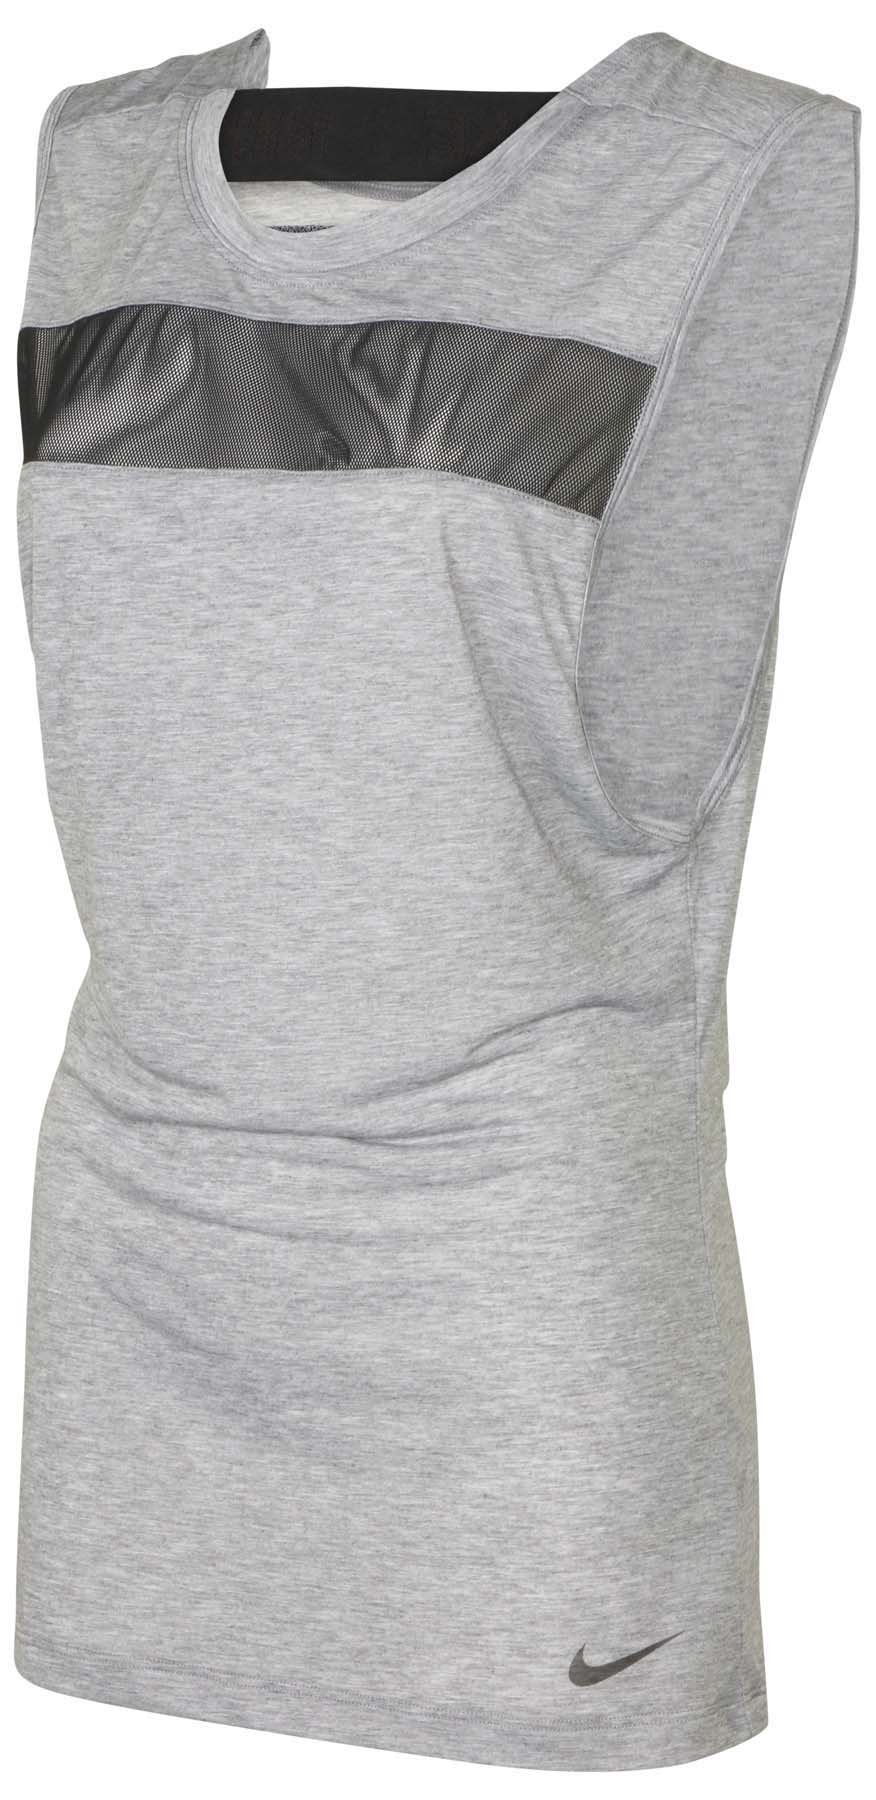 Nike Women's Dri-Fit Breathe Sleeveless Training Top (Heather Grey, X-Small) - image 4 of 5